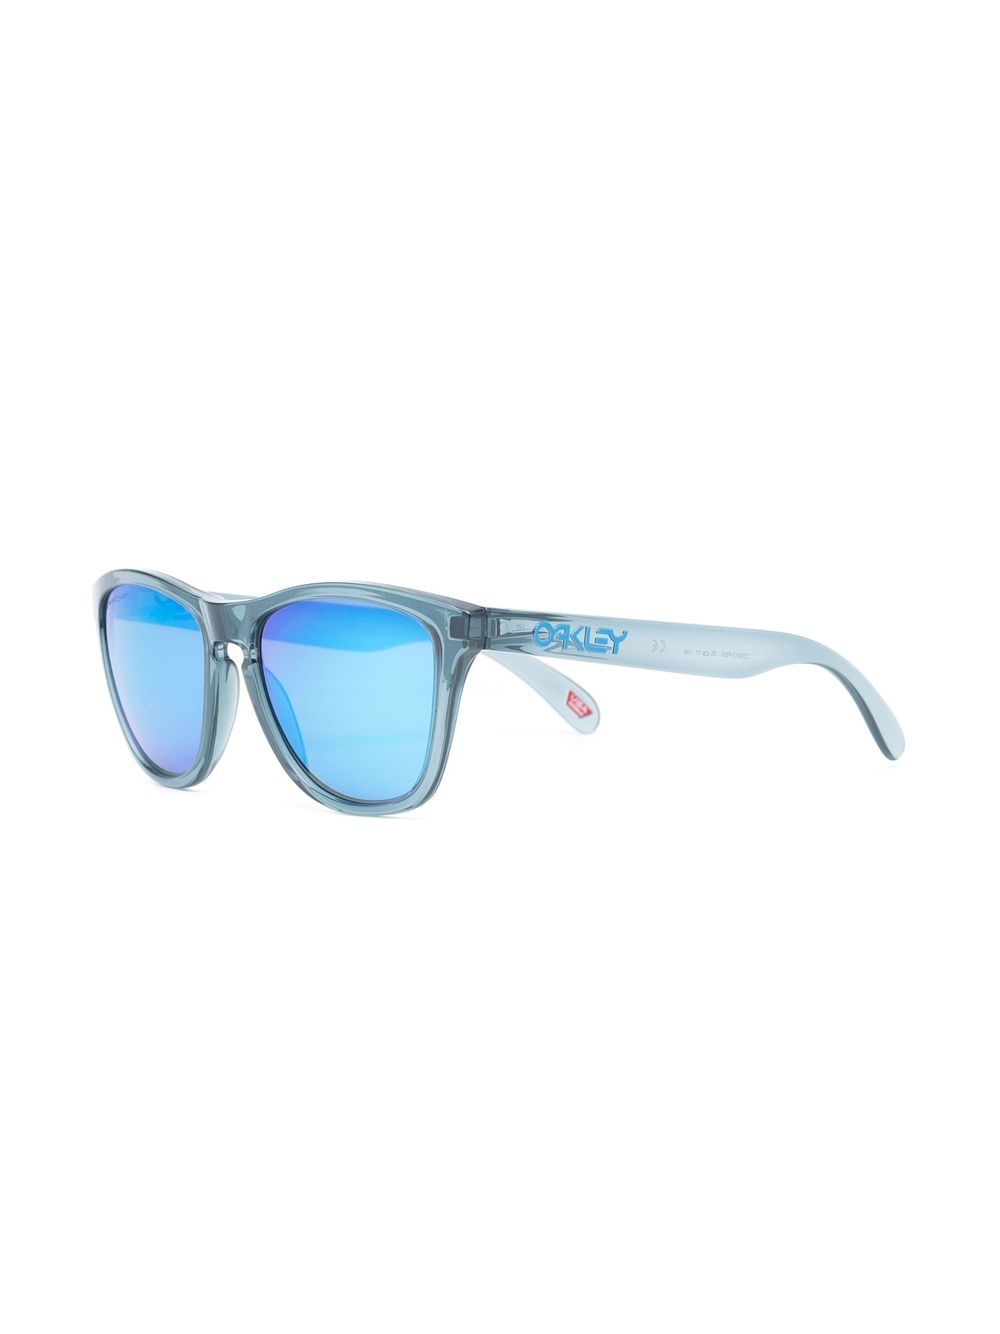 White rounded square-frame sunglasses